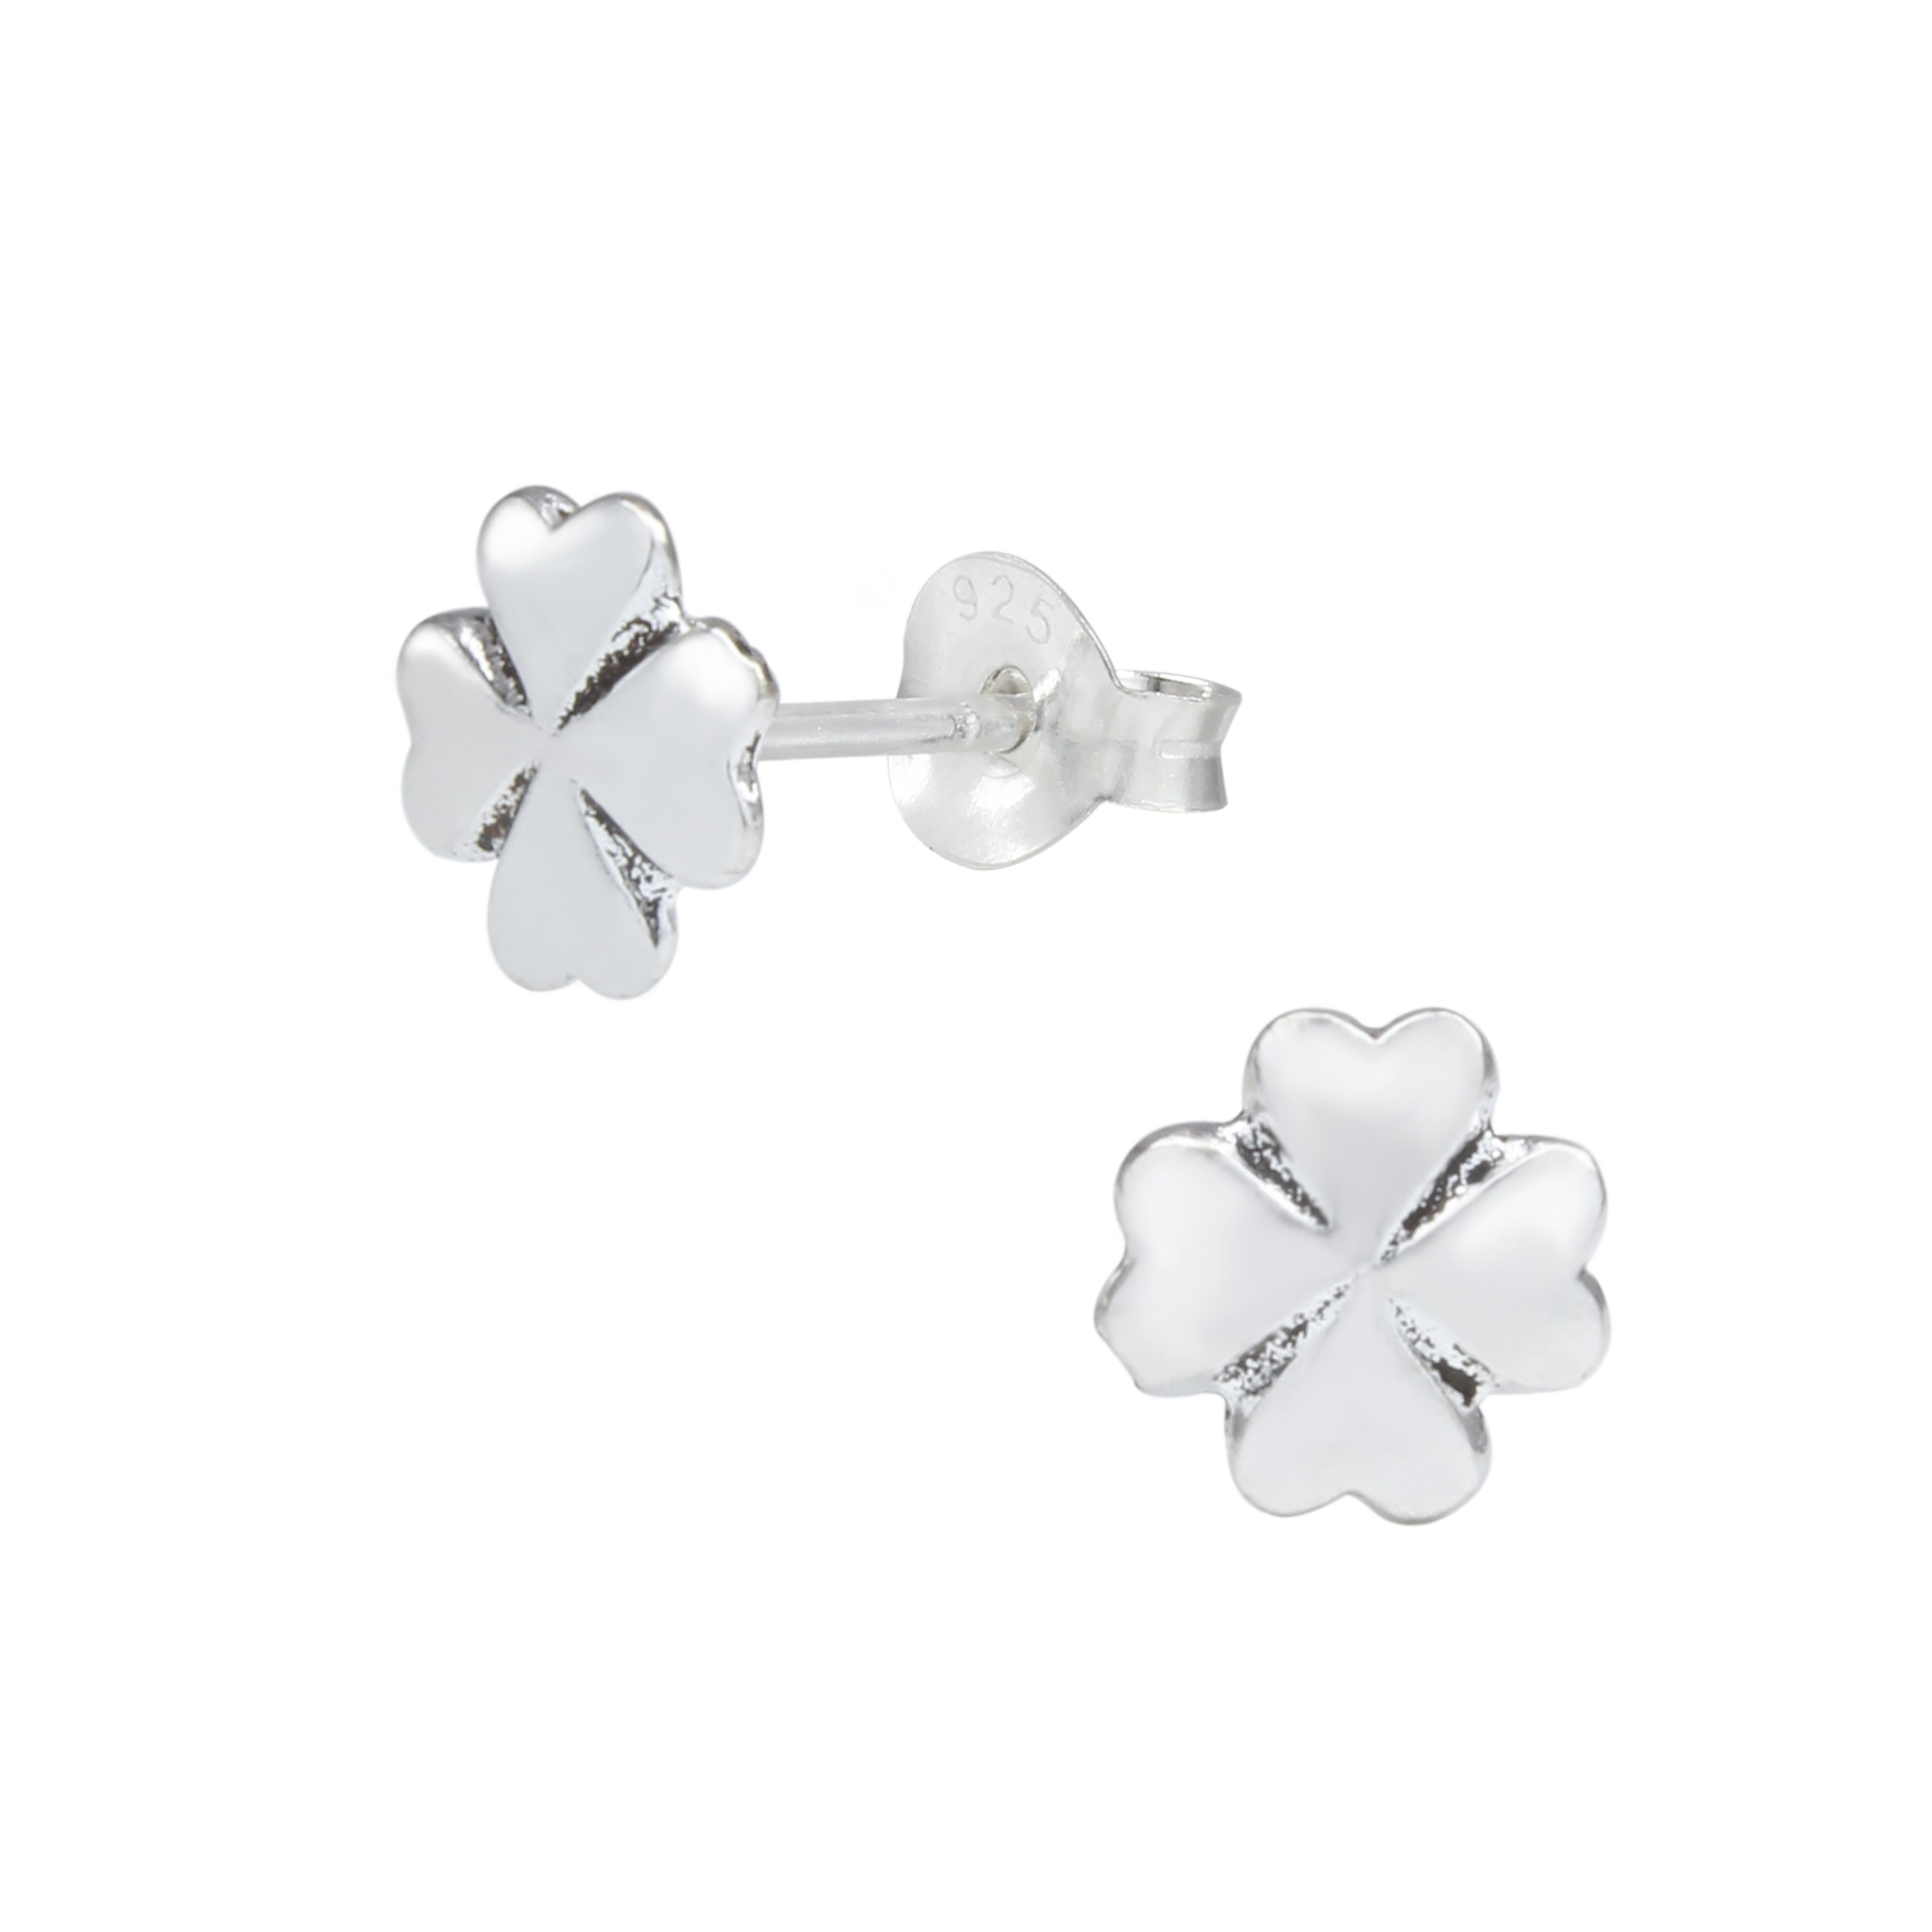 4 leaf clover sterling silver post earrings